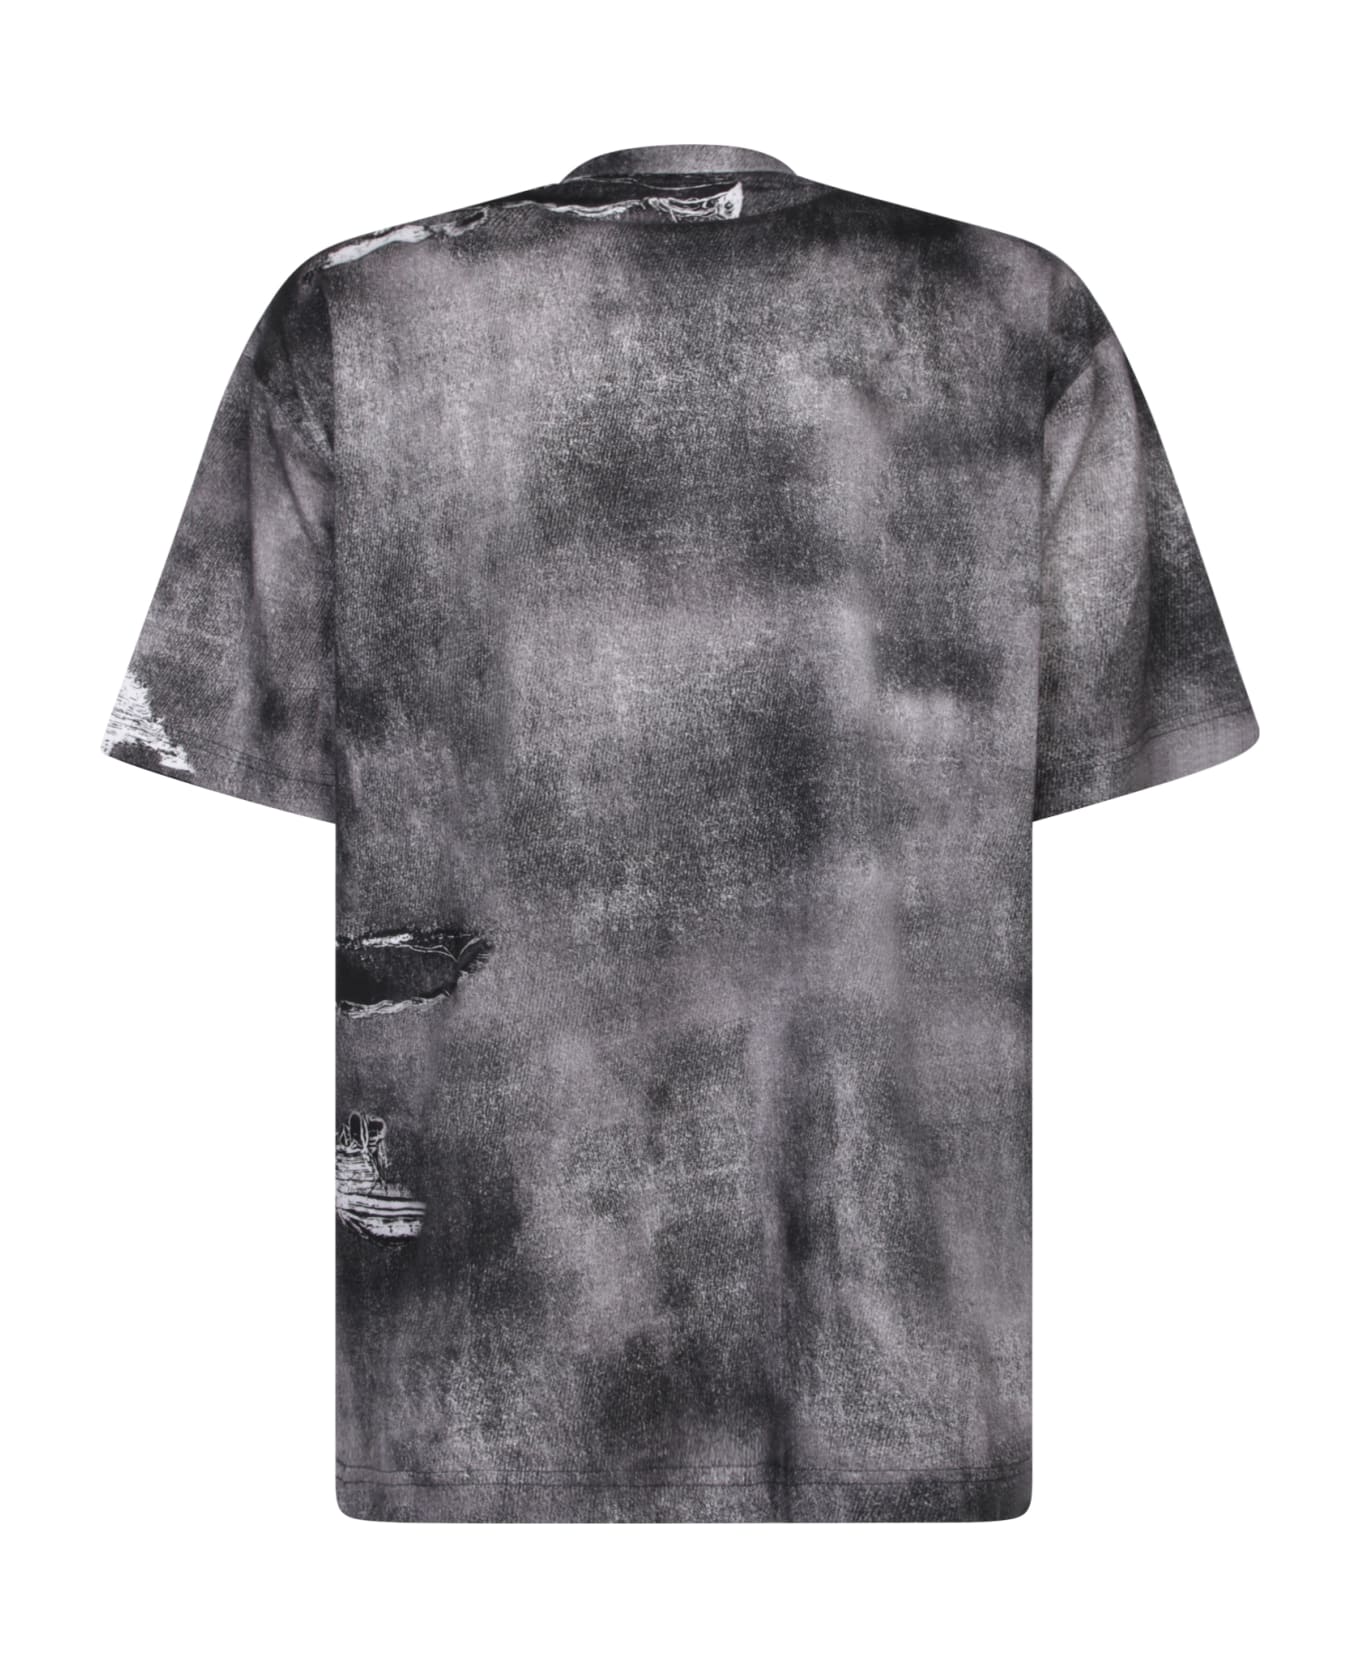 Diesel T-wash Black T-shirt - Black